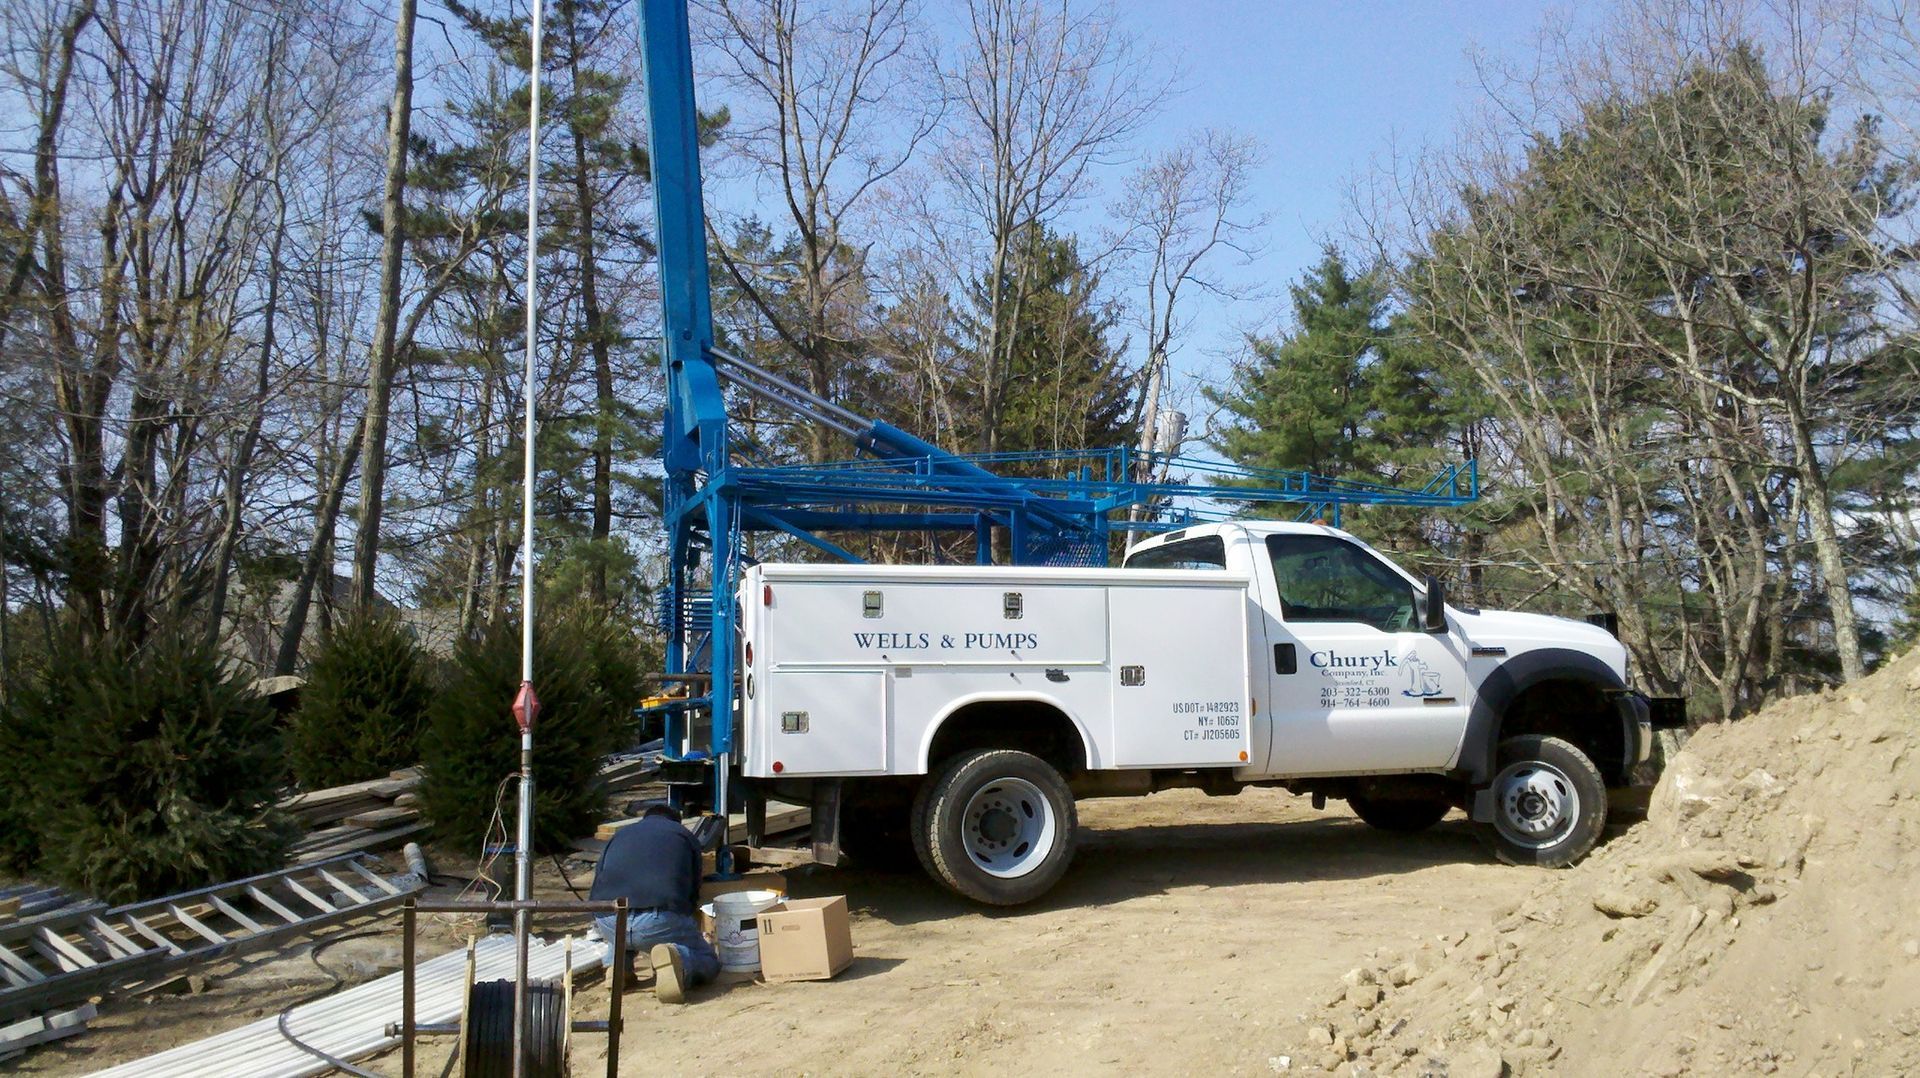 Churyk Company Truck installing new well